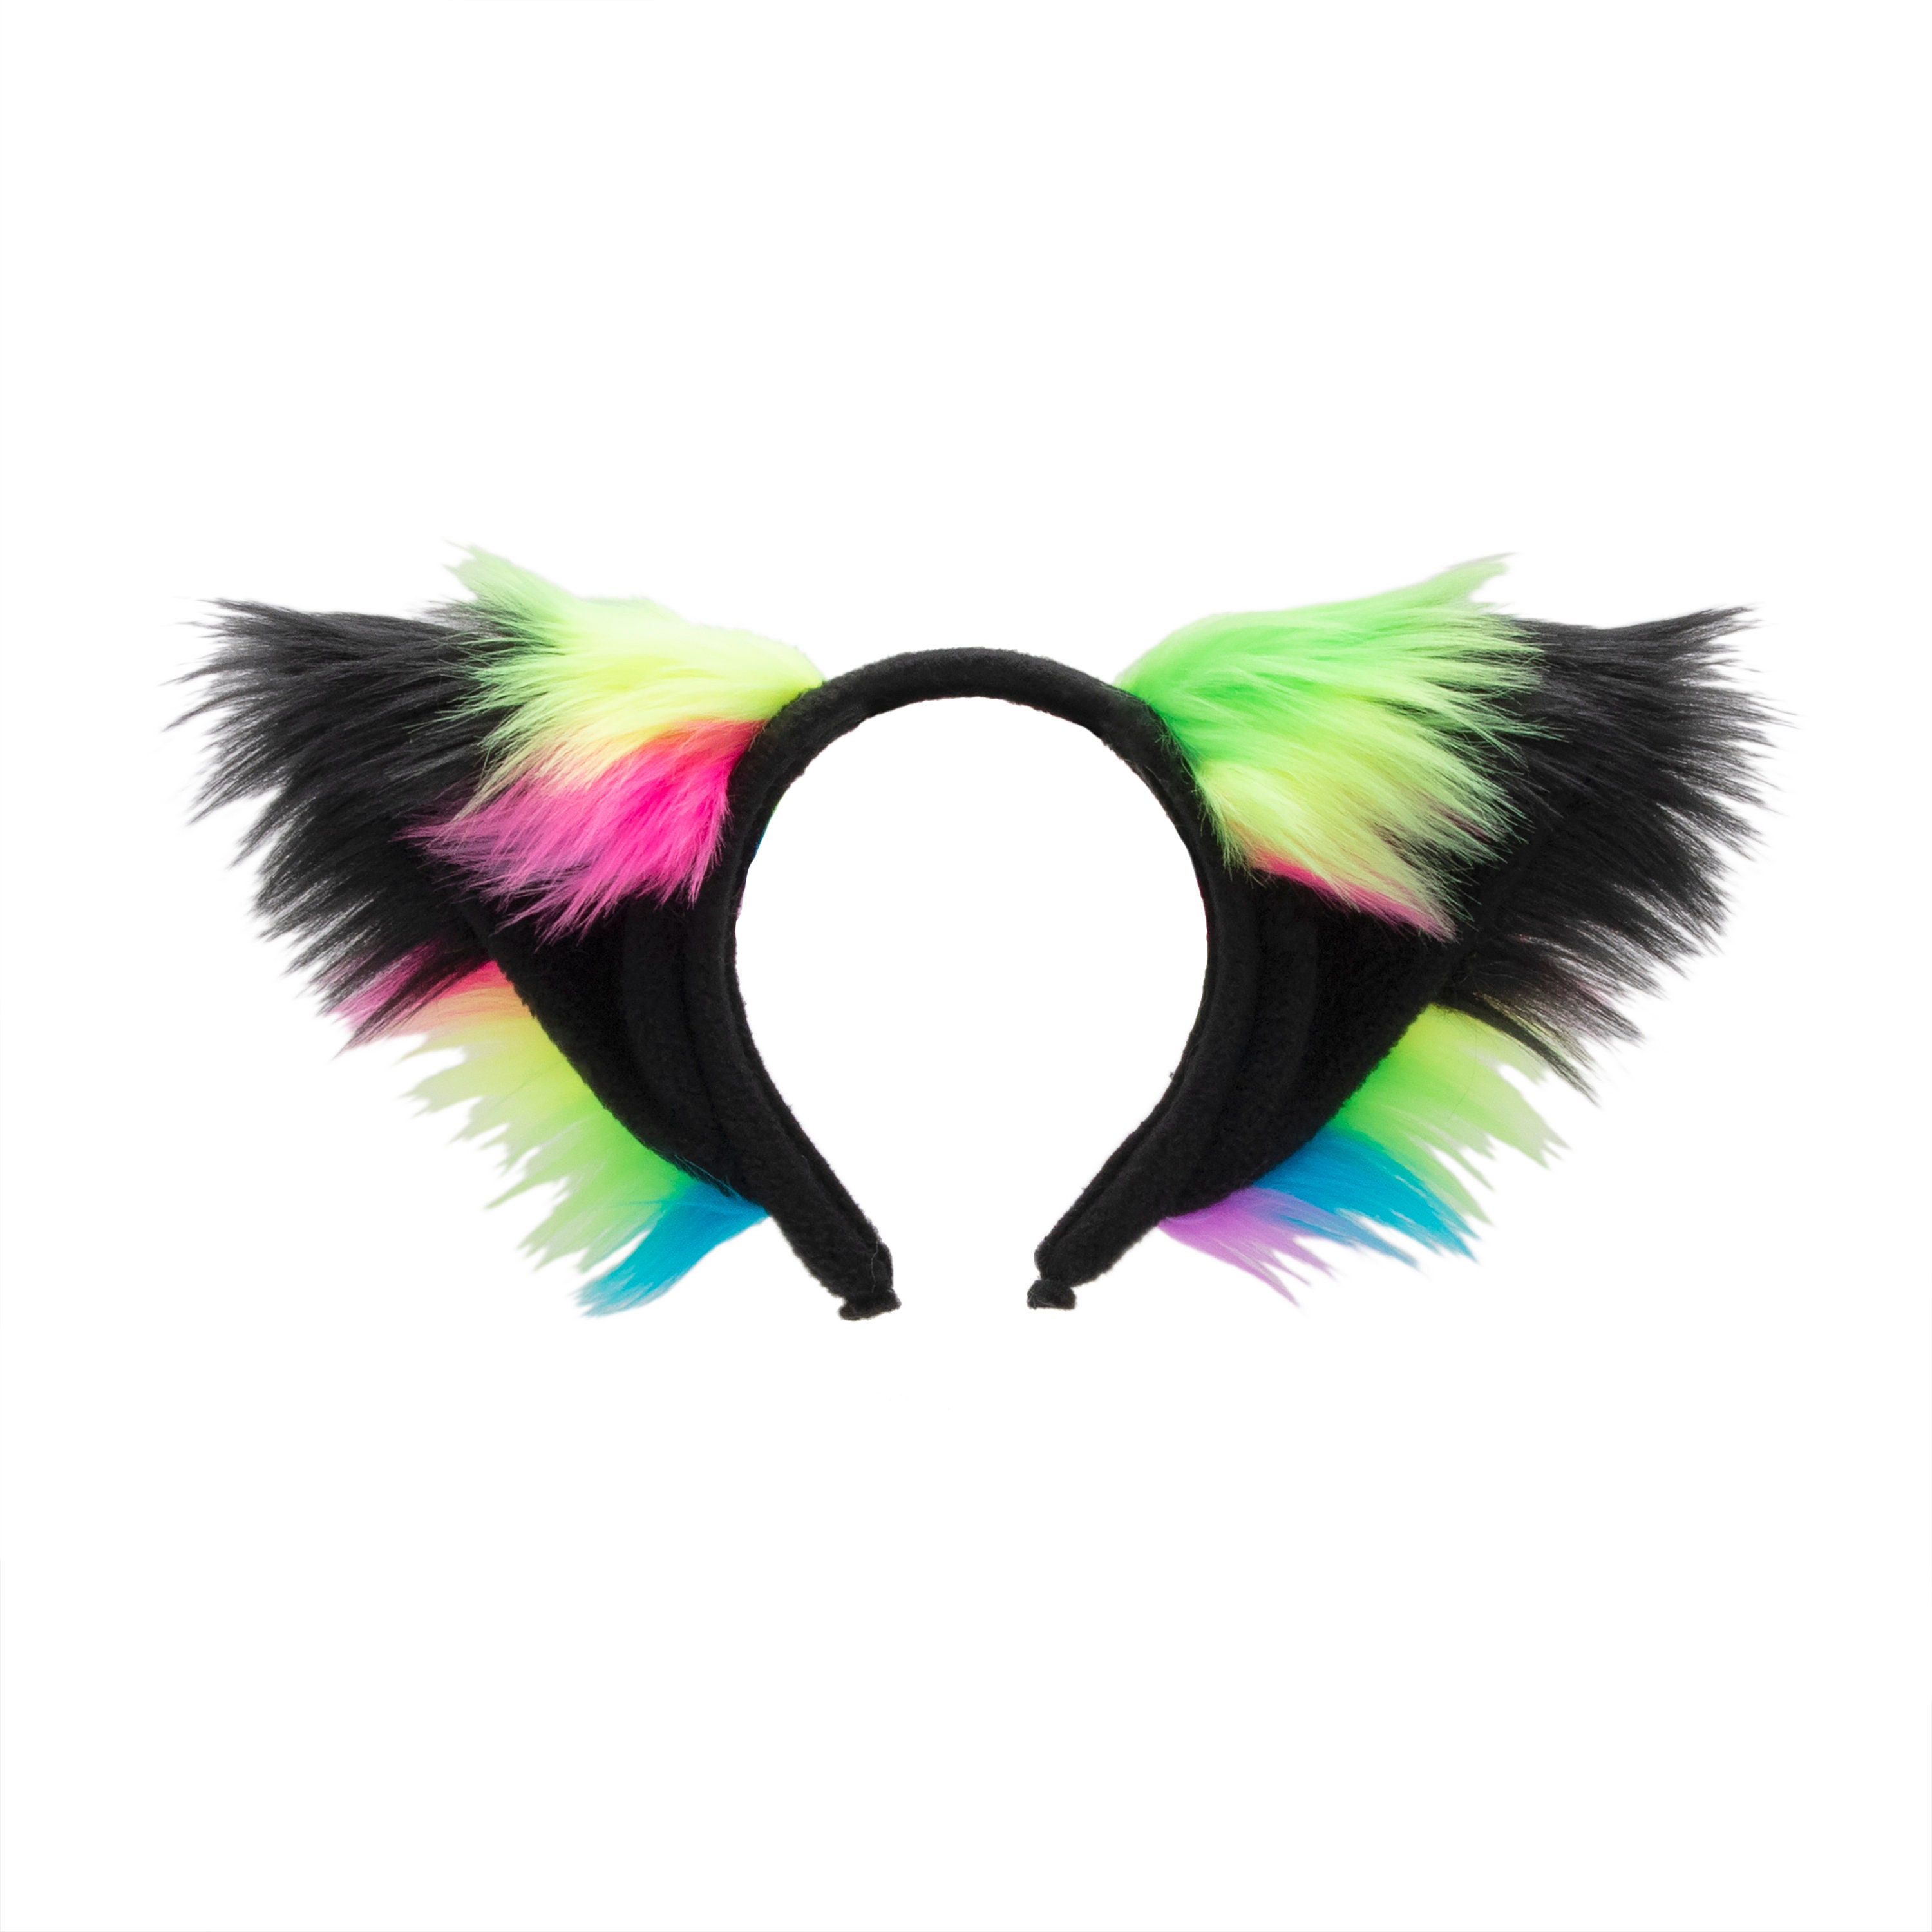 Pawstar Rainbow Fur FOX Ears Headband Neon Pastel Galaxy UV | Etsy